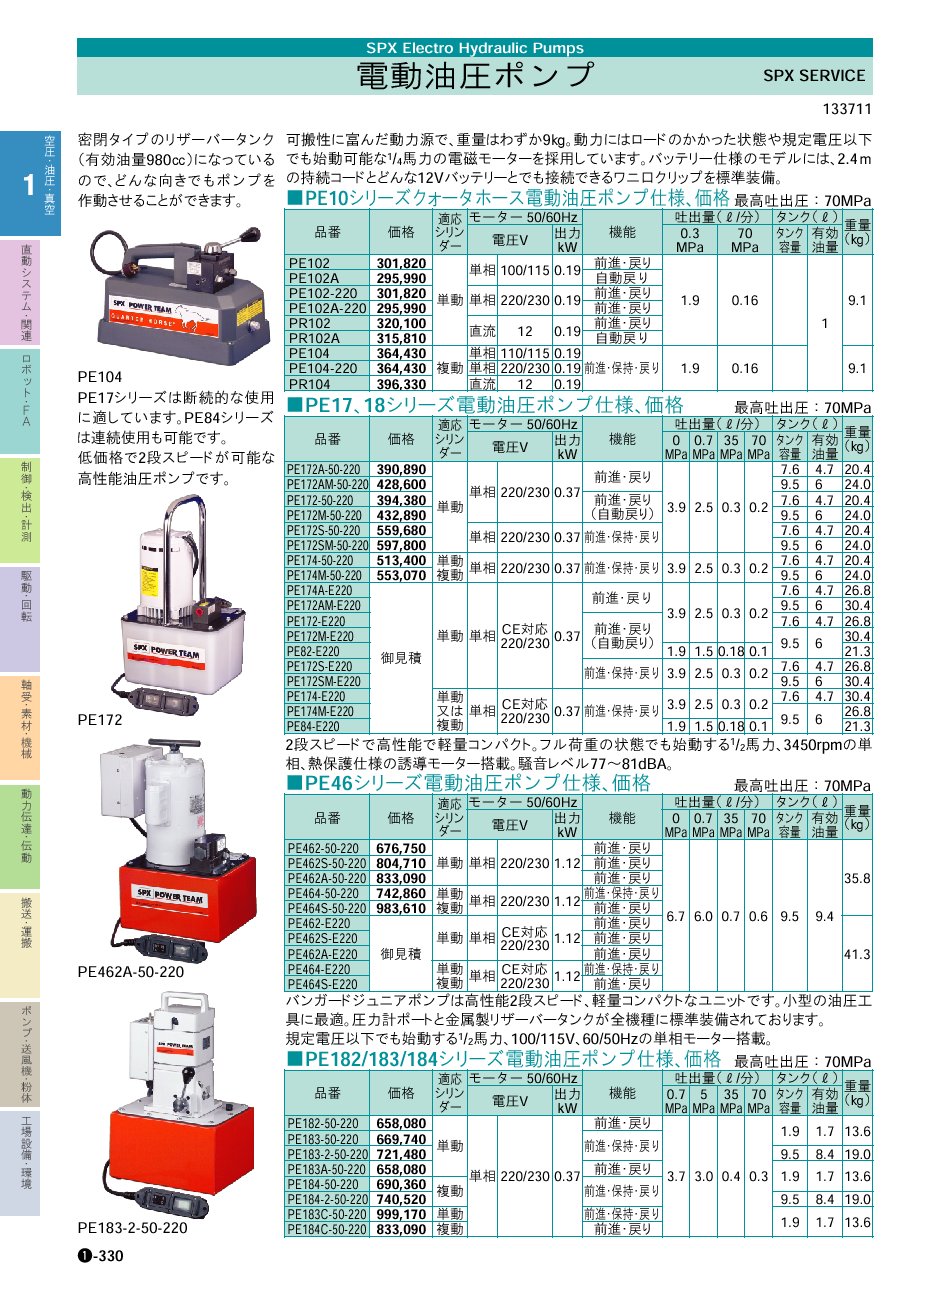 SPX SERVICE　ジャテック(株)　電動油圧ポンプ　空圧・油圧・真空機器　P01-330　価格